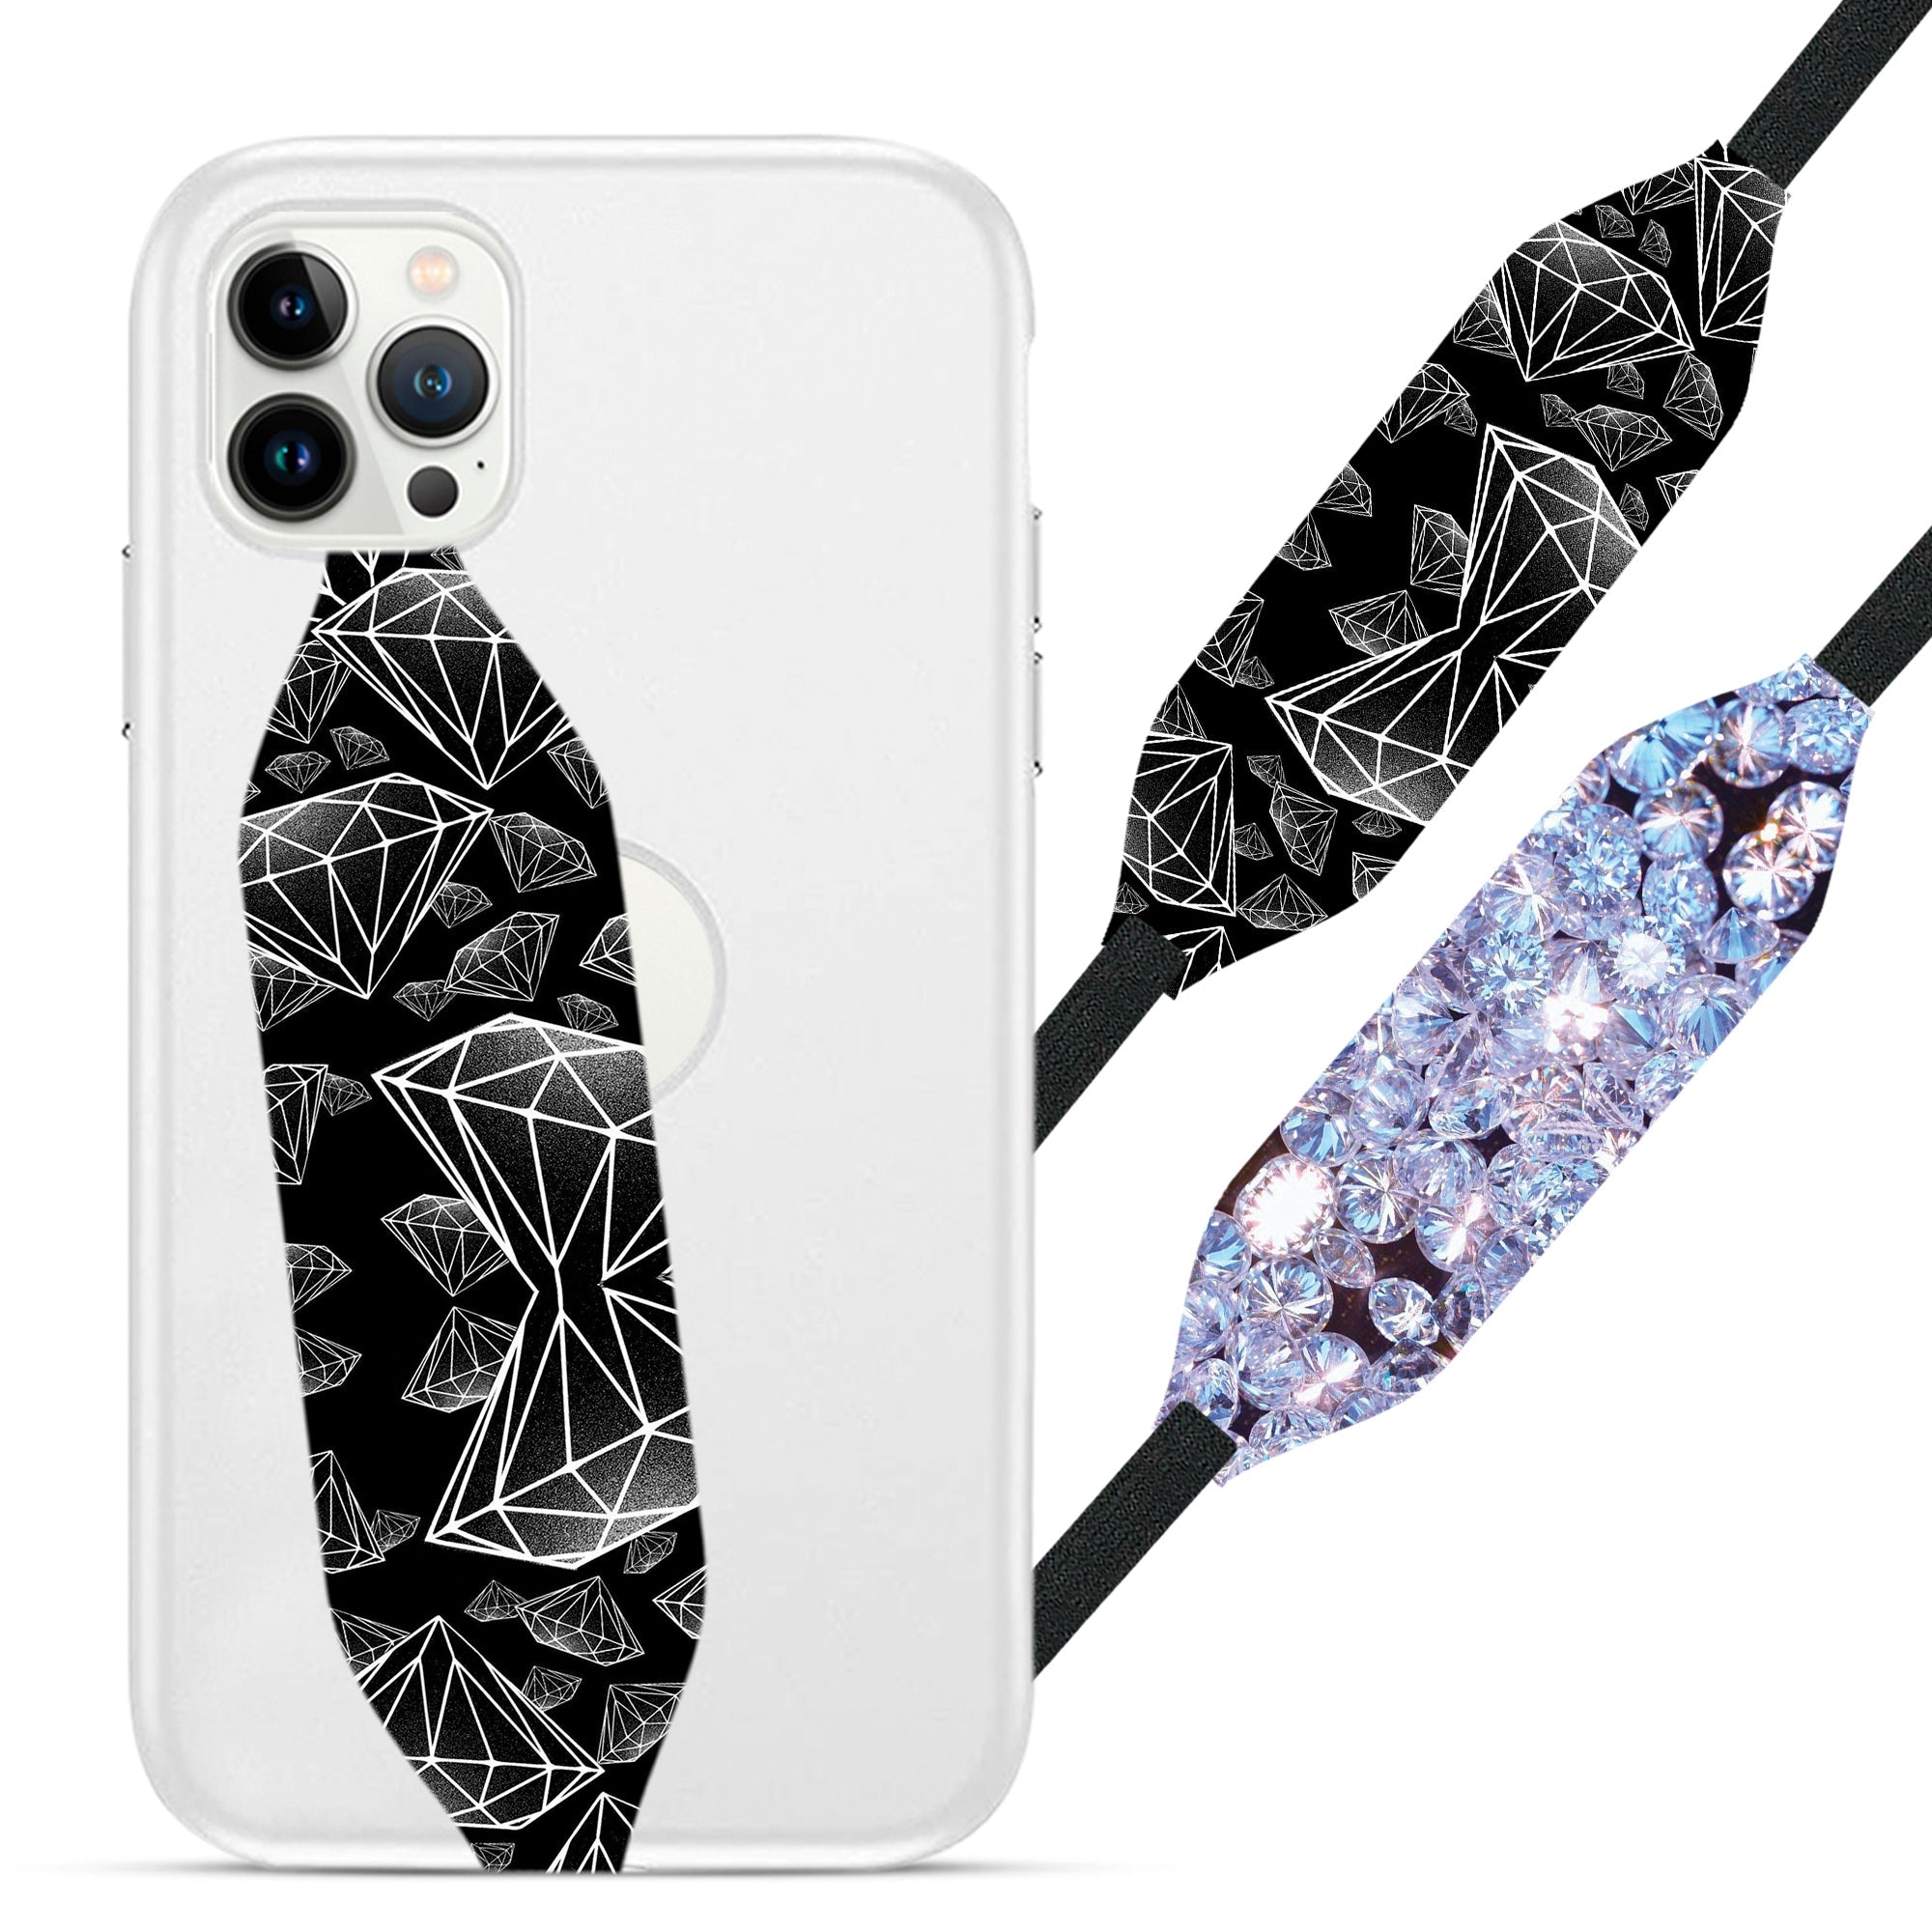 Universal Phone Grip Strap - Diamond Pattern